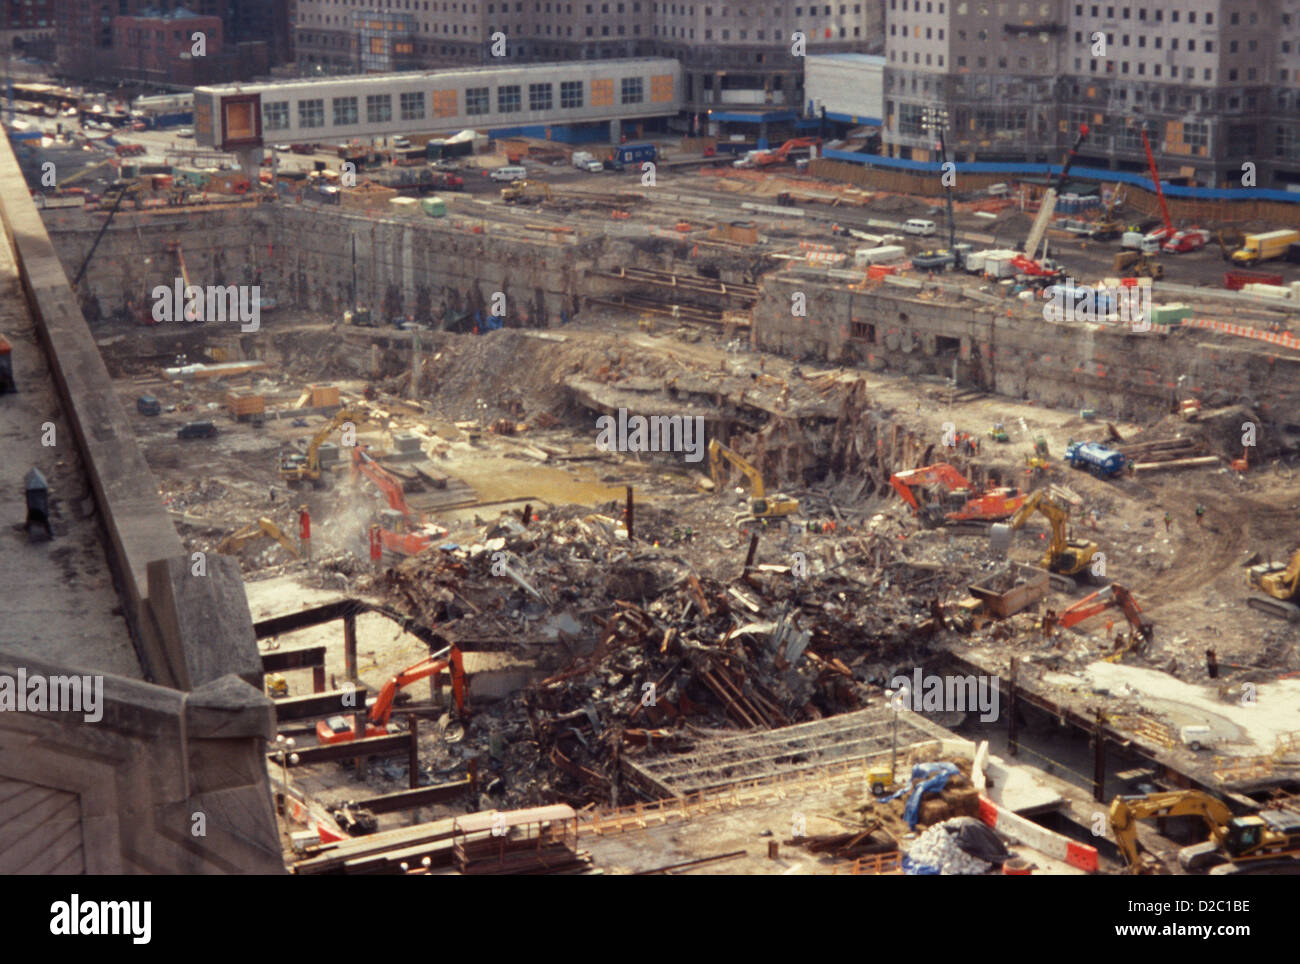 New York City. Post 9/11/01 World Trade Center Remains, Ground Zero. Recovery Effort. Stock Photo